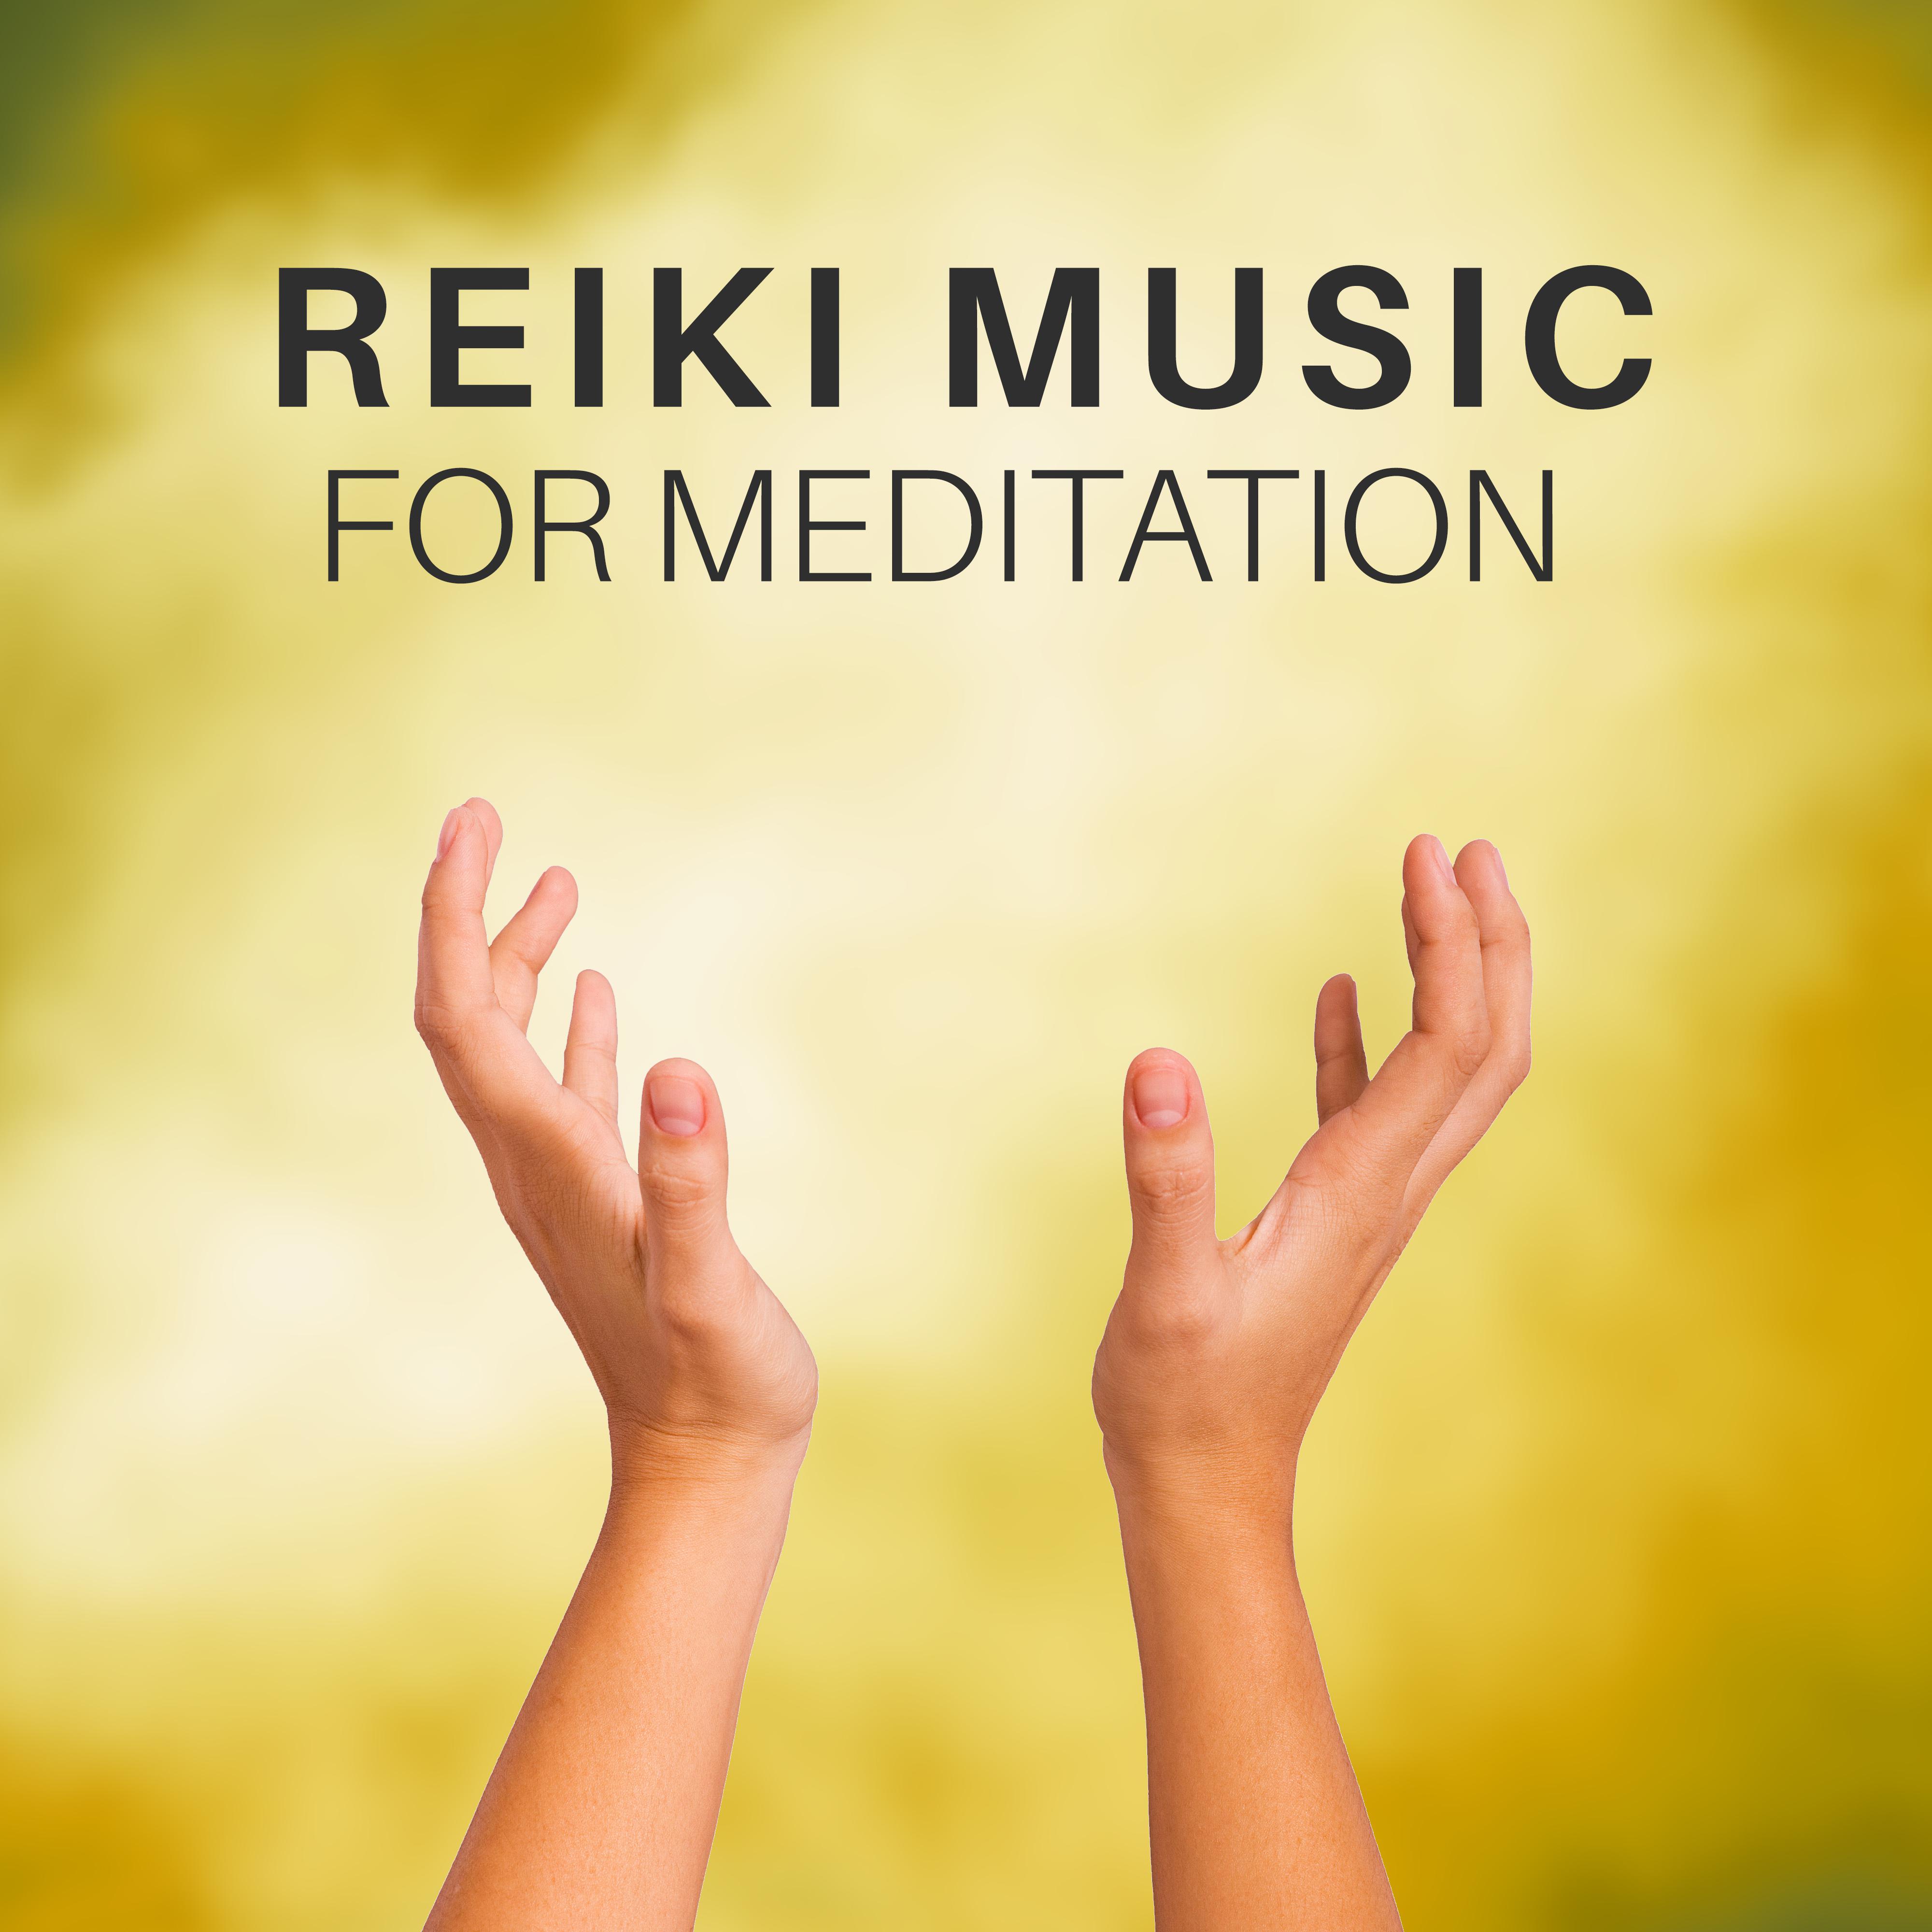 Reiki Music for Meditation  Training Yoga, Pure Mind, Zen, Buddha Lounge, Harmony, Deep Focus, Peaceful Music for Relaxation